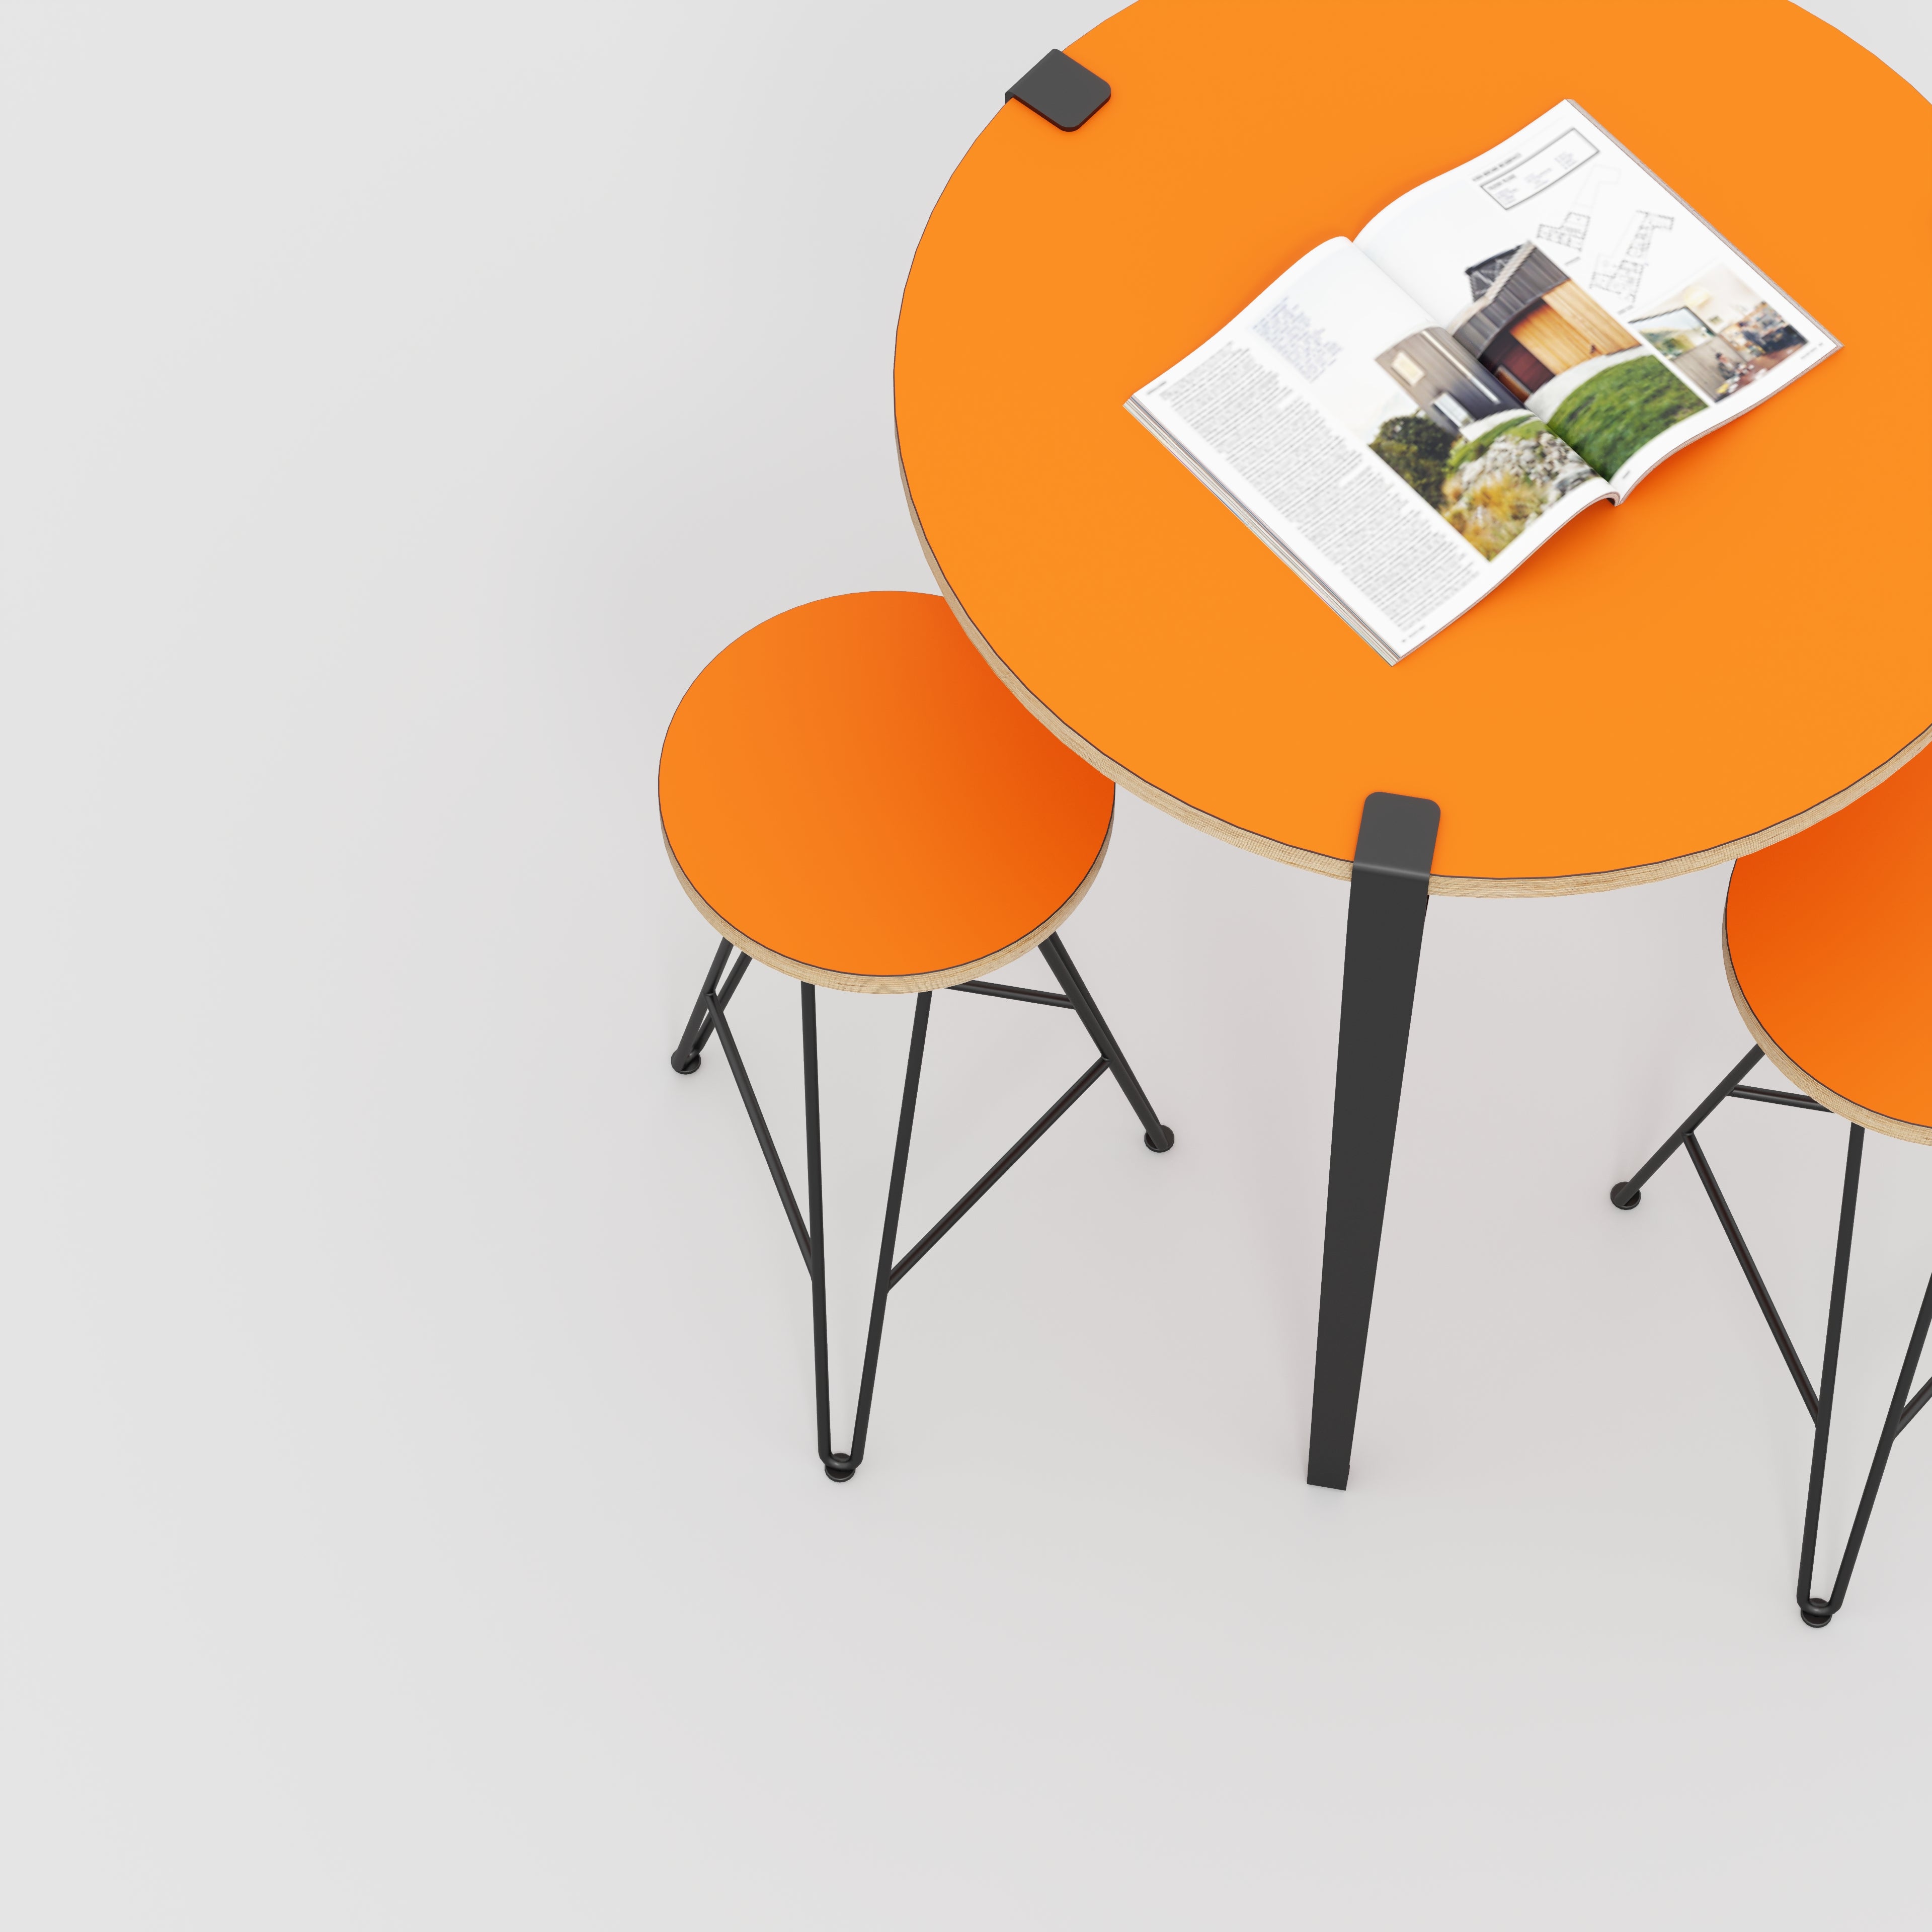 Round Table with Black Tiptoe Legs - Formica Levante Orange - 800(dia) x 900(h)